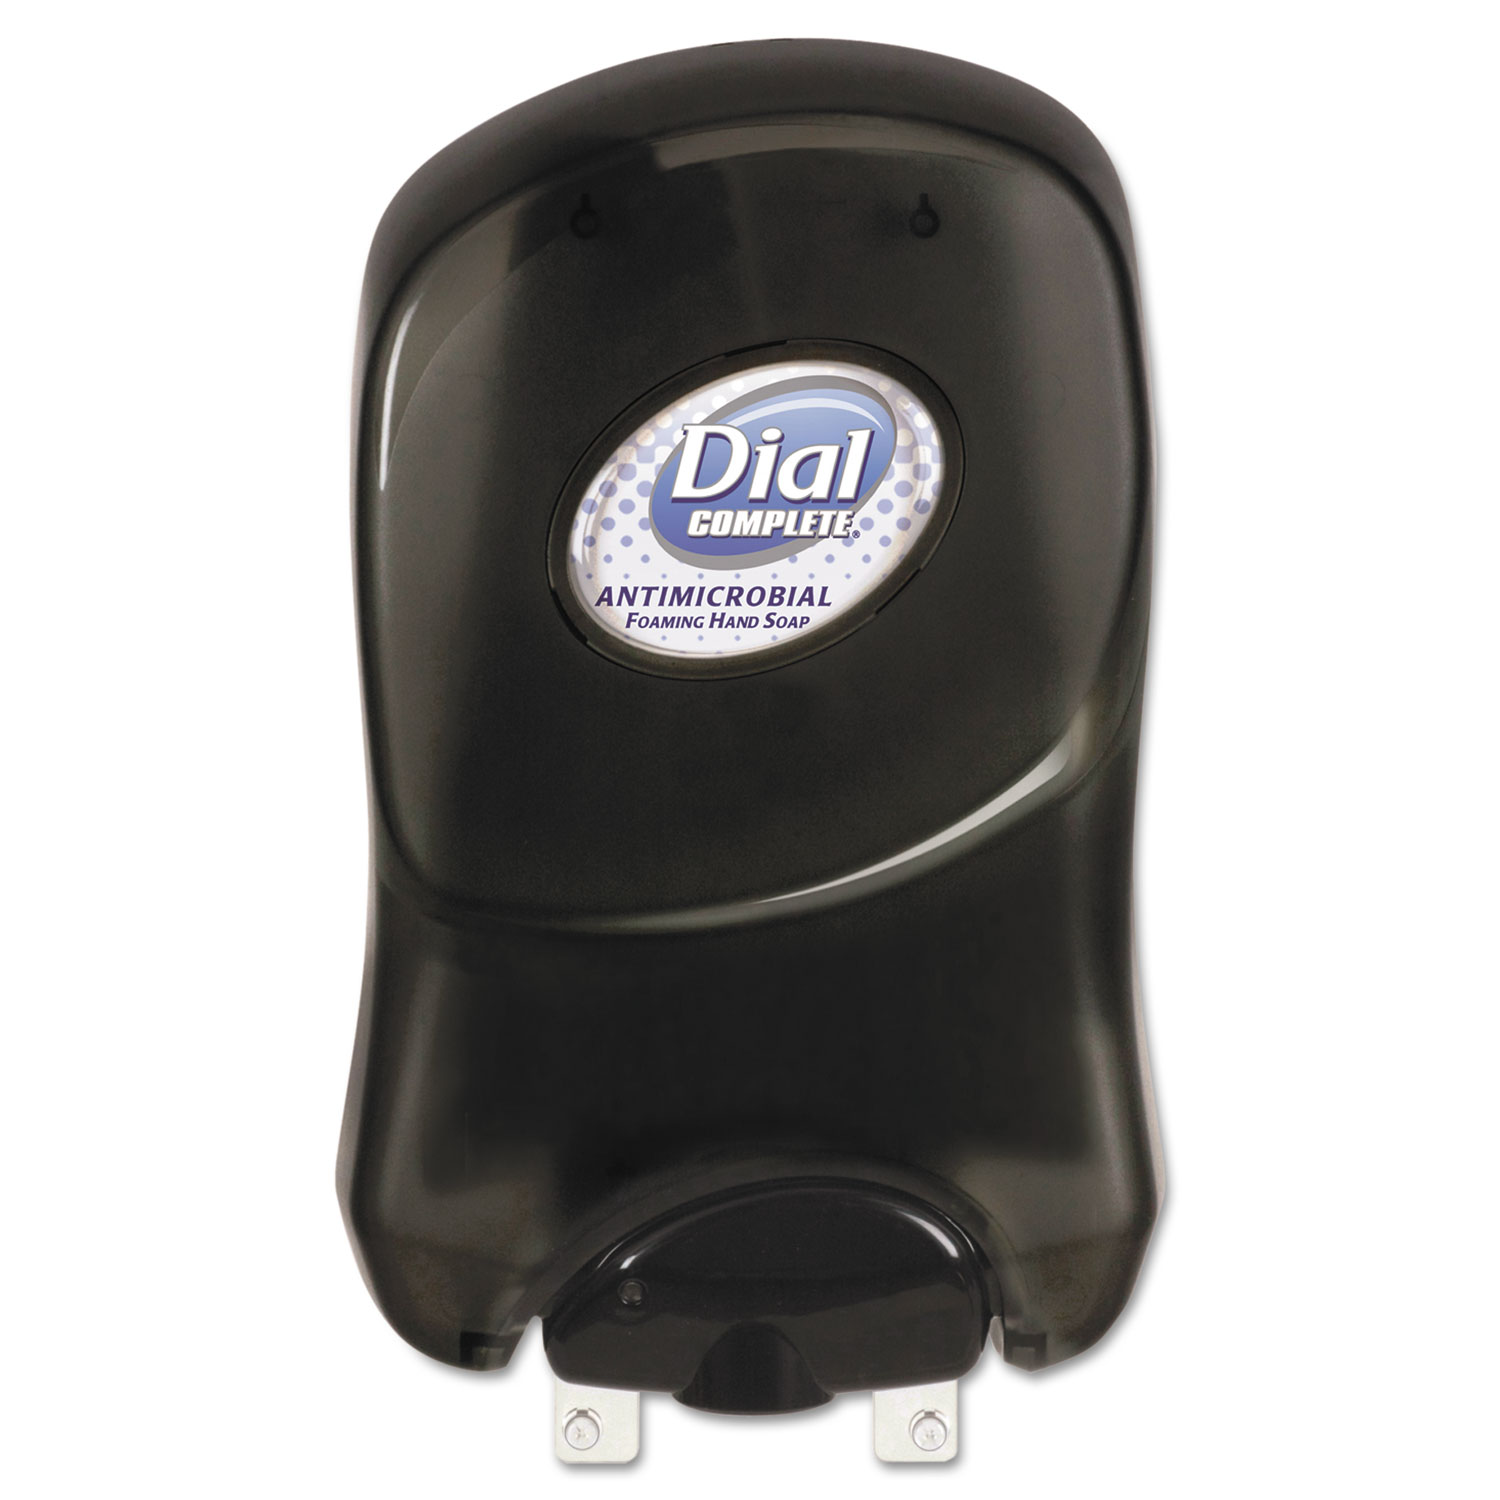  Dial Professional 1700099117 Duo Touch-Free Dispenser, 1250 mL, 7.25 x 3.88 x 11.75, Smoke (DIA99117) 